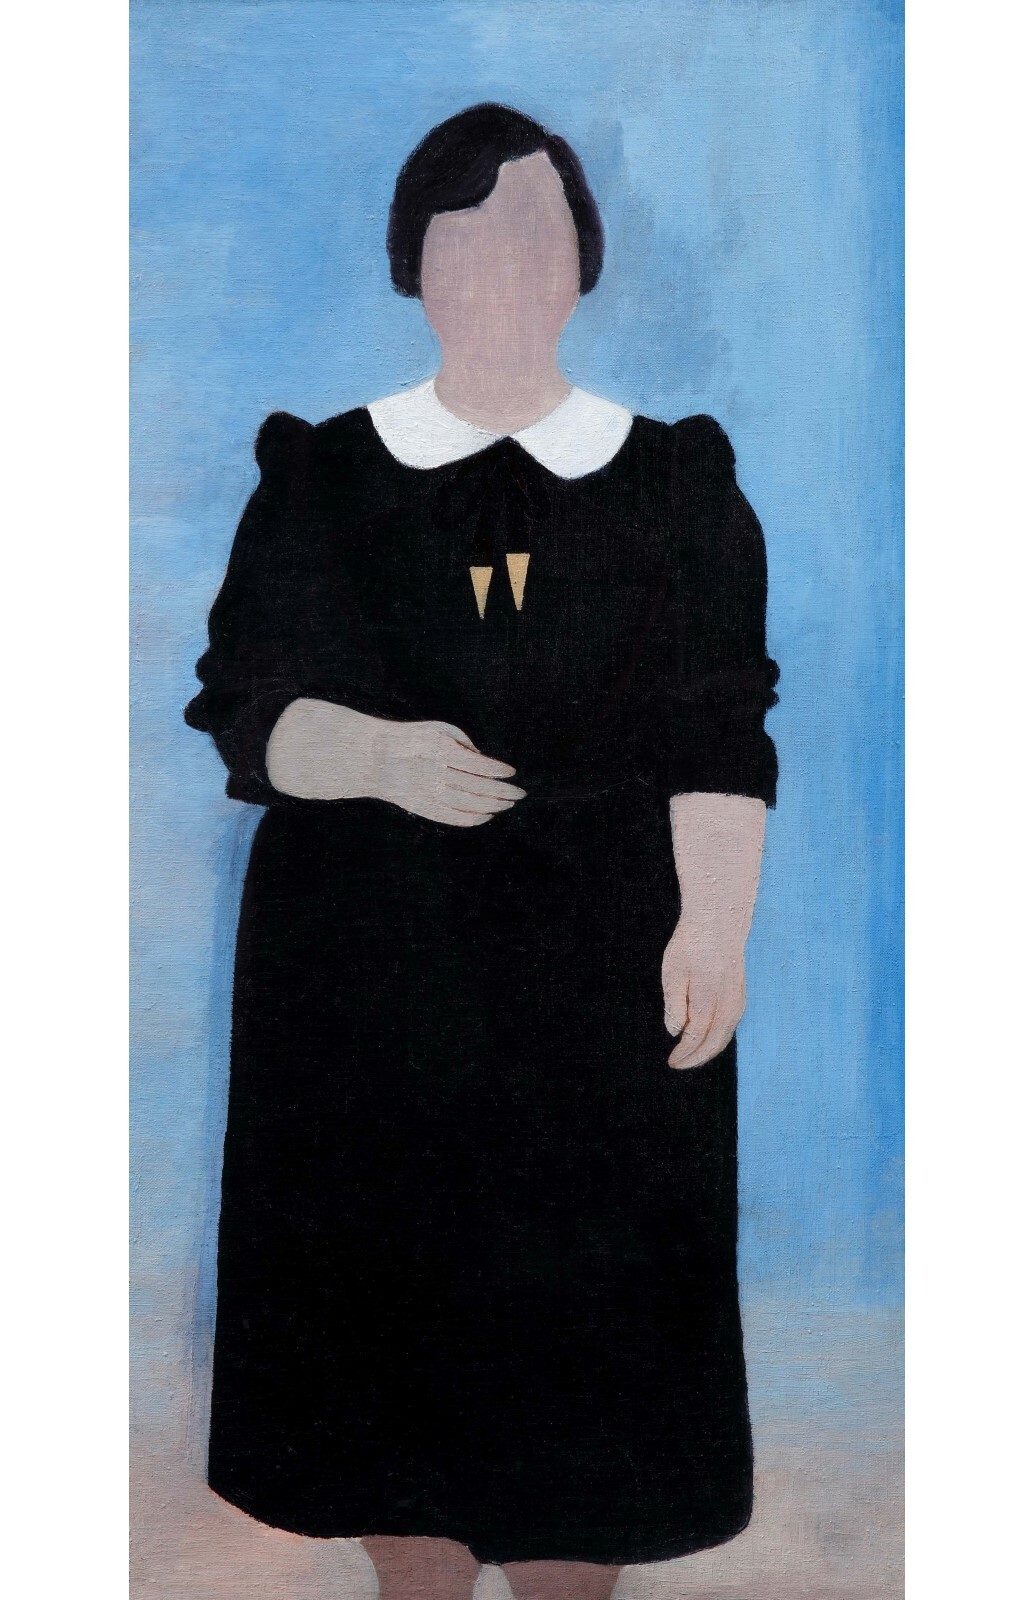 Портрет М. Зильберман (жены художника). Начало 1930-х